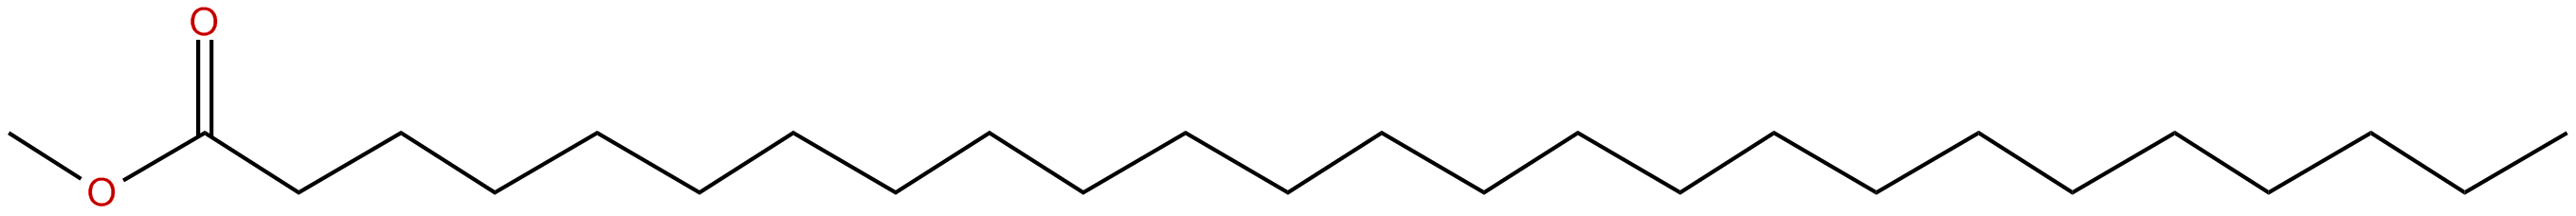 Image of methyl pentacosanoate